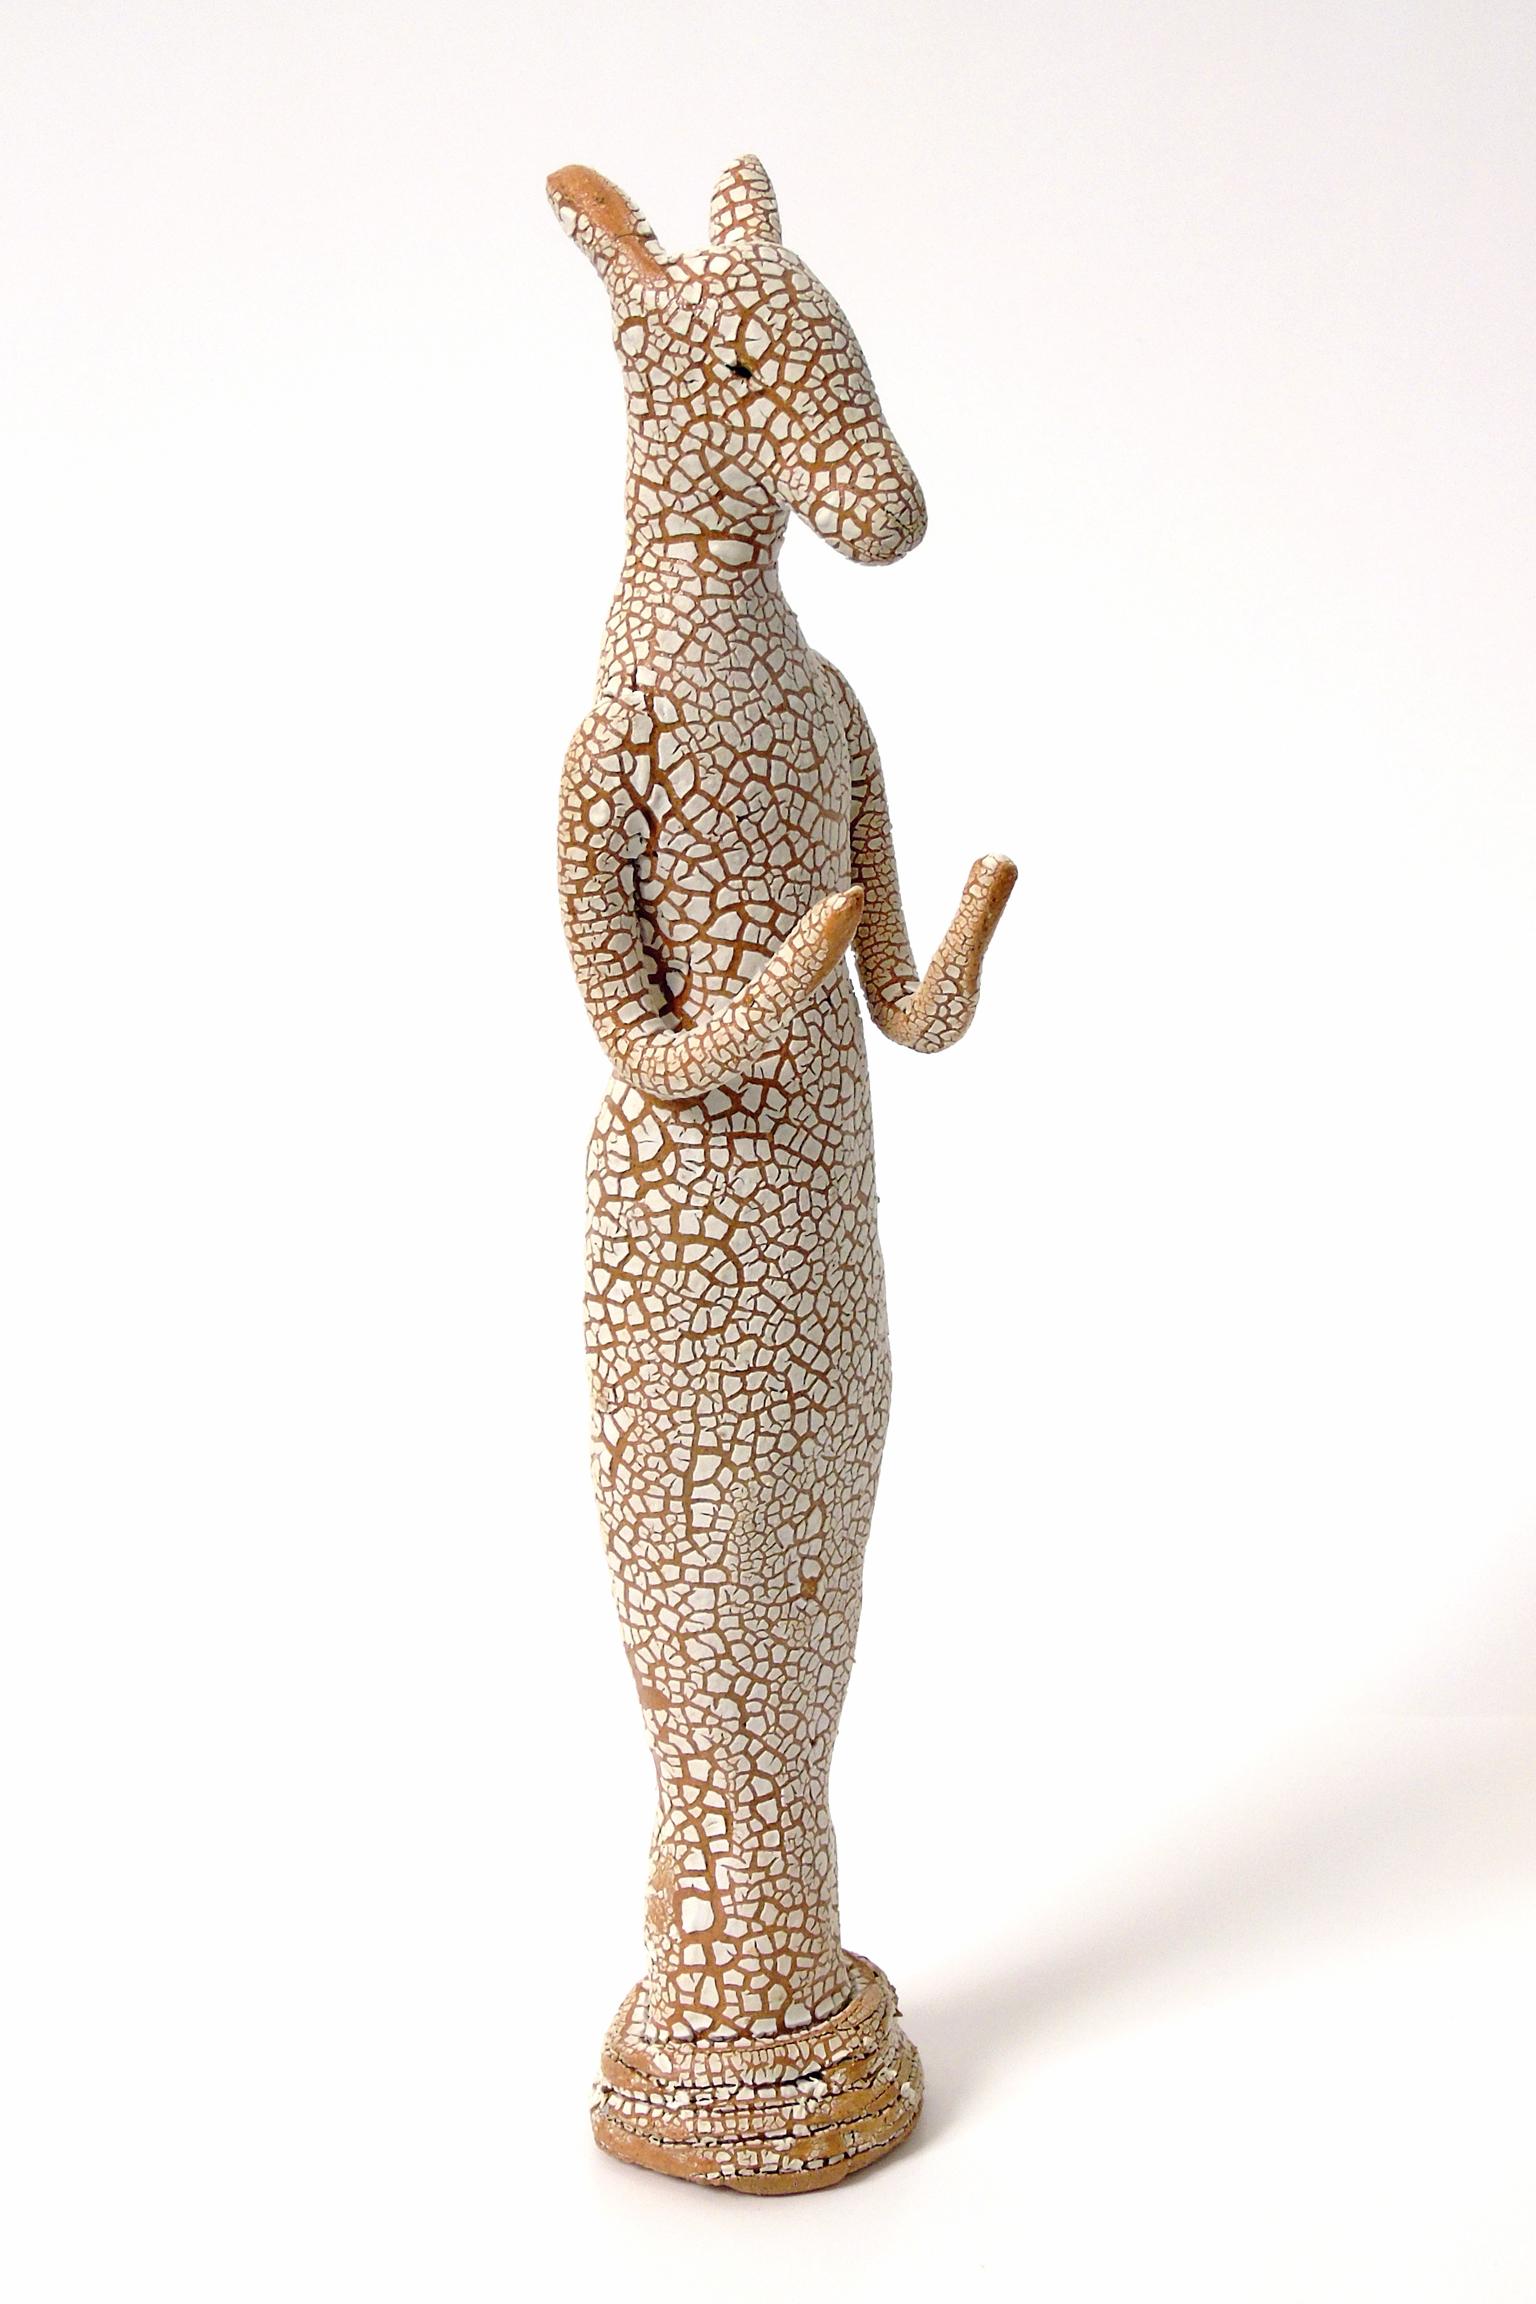 Tiny Goat Totem -125 - Sculpture by Robin Whiteman